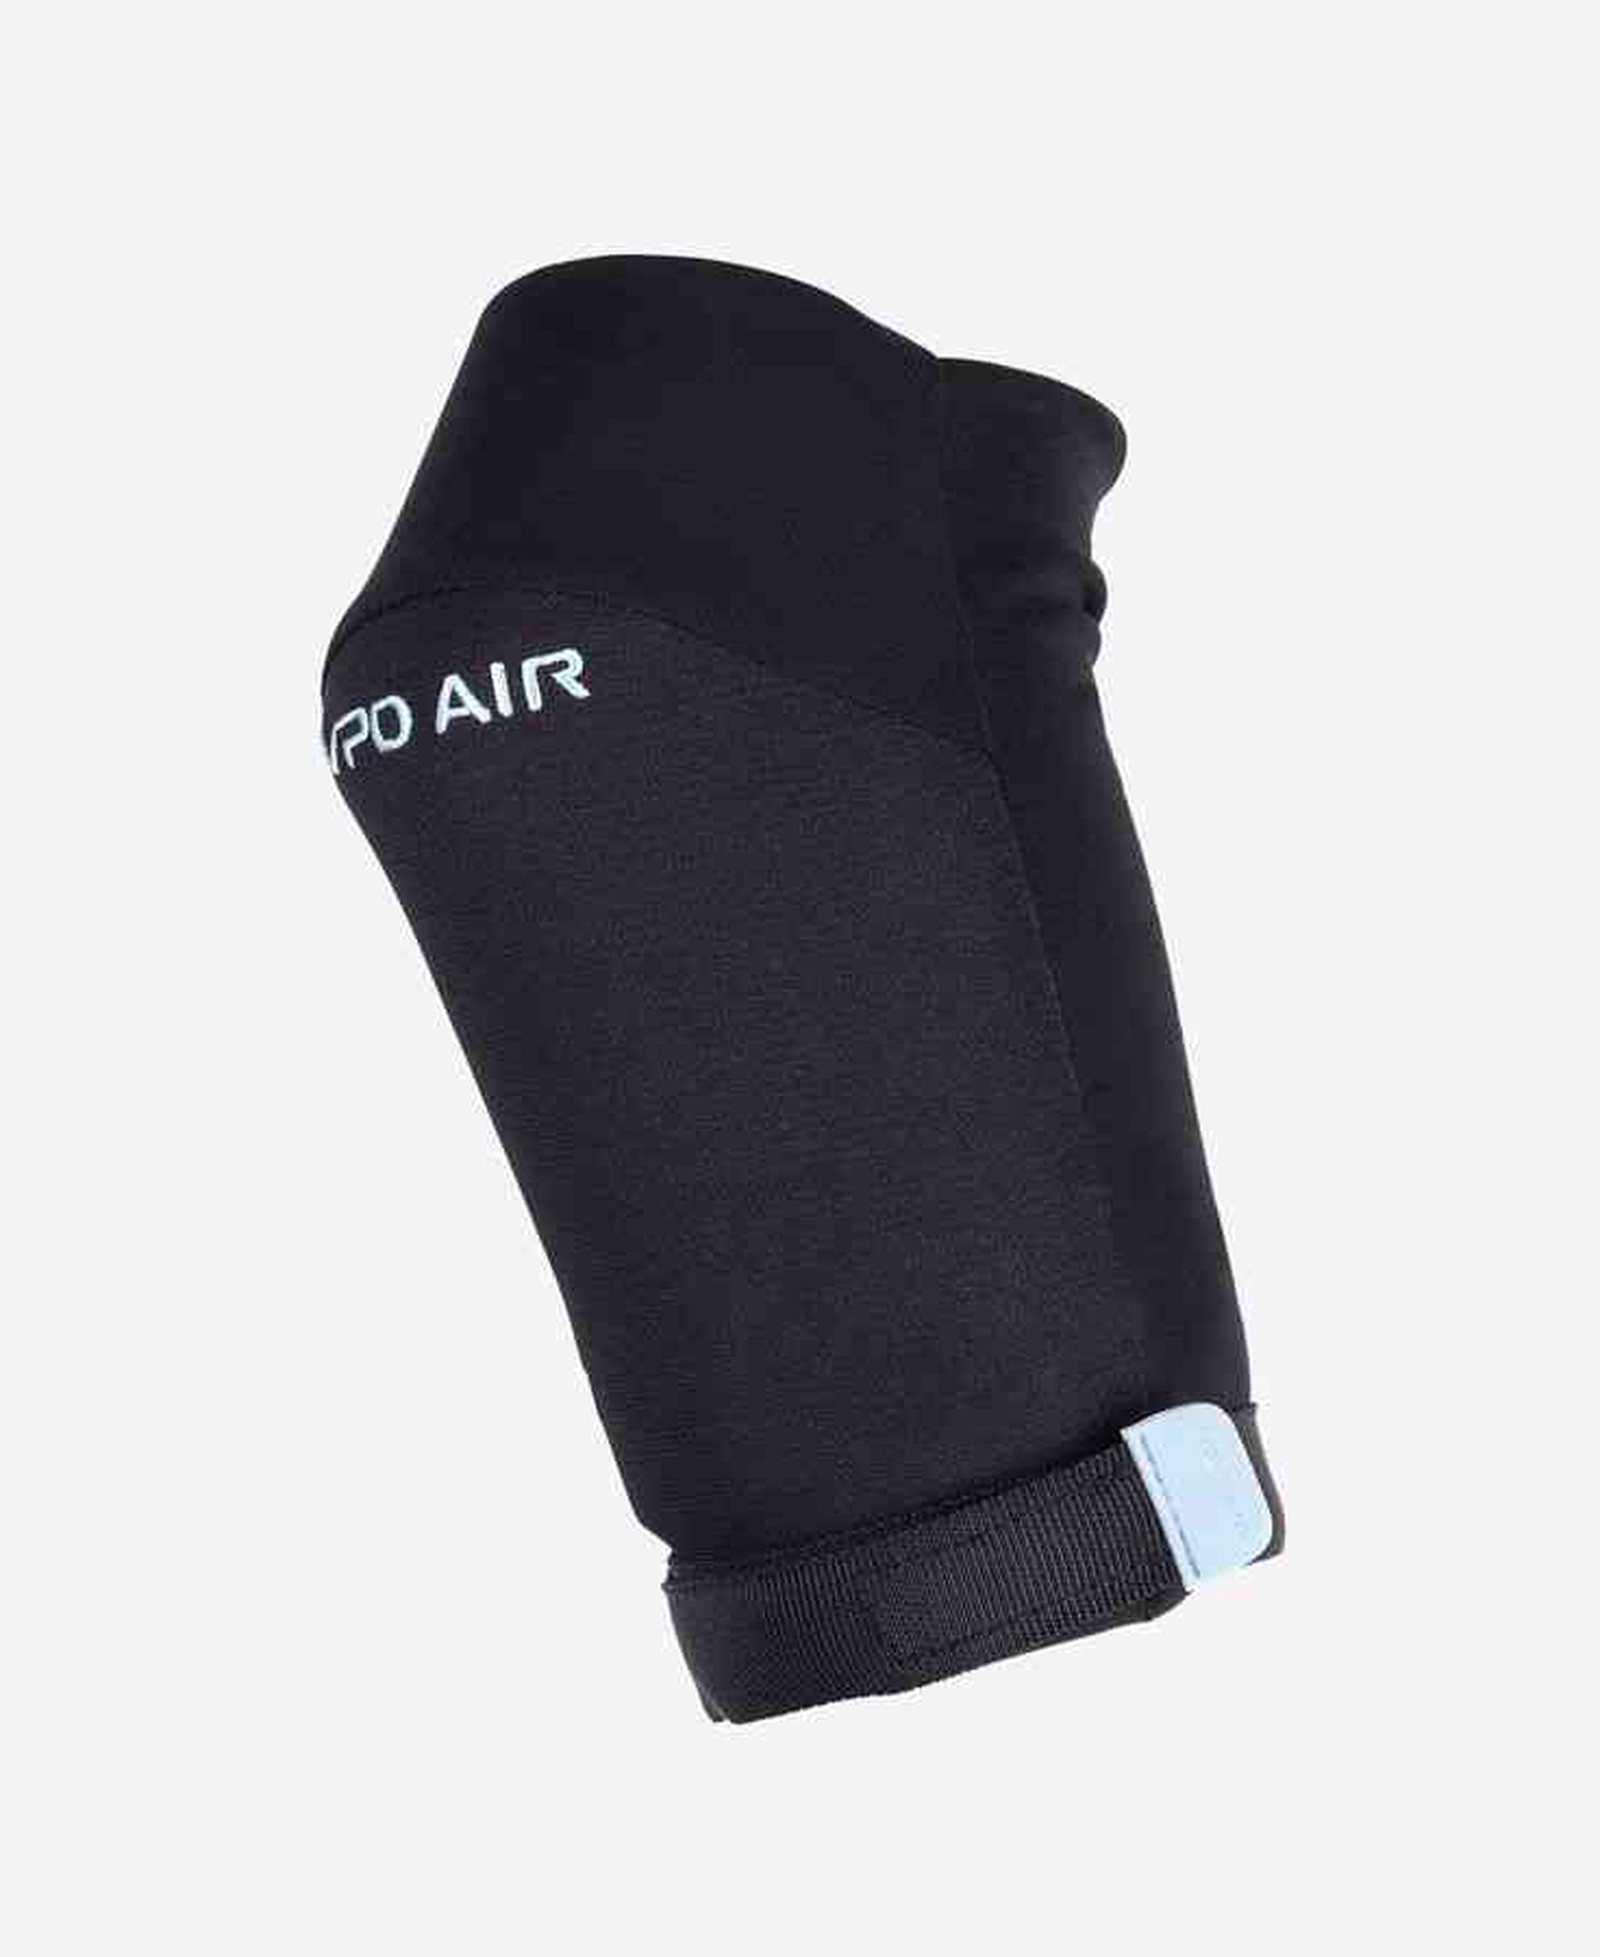 Joint VPD Air Elbow